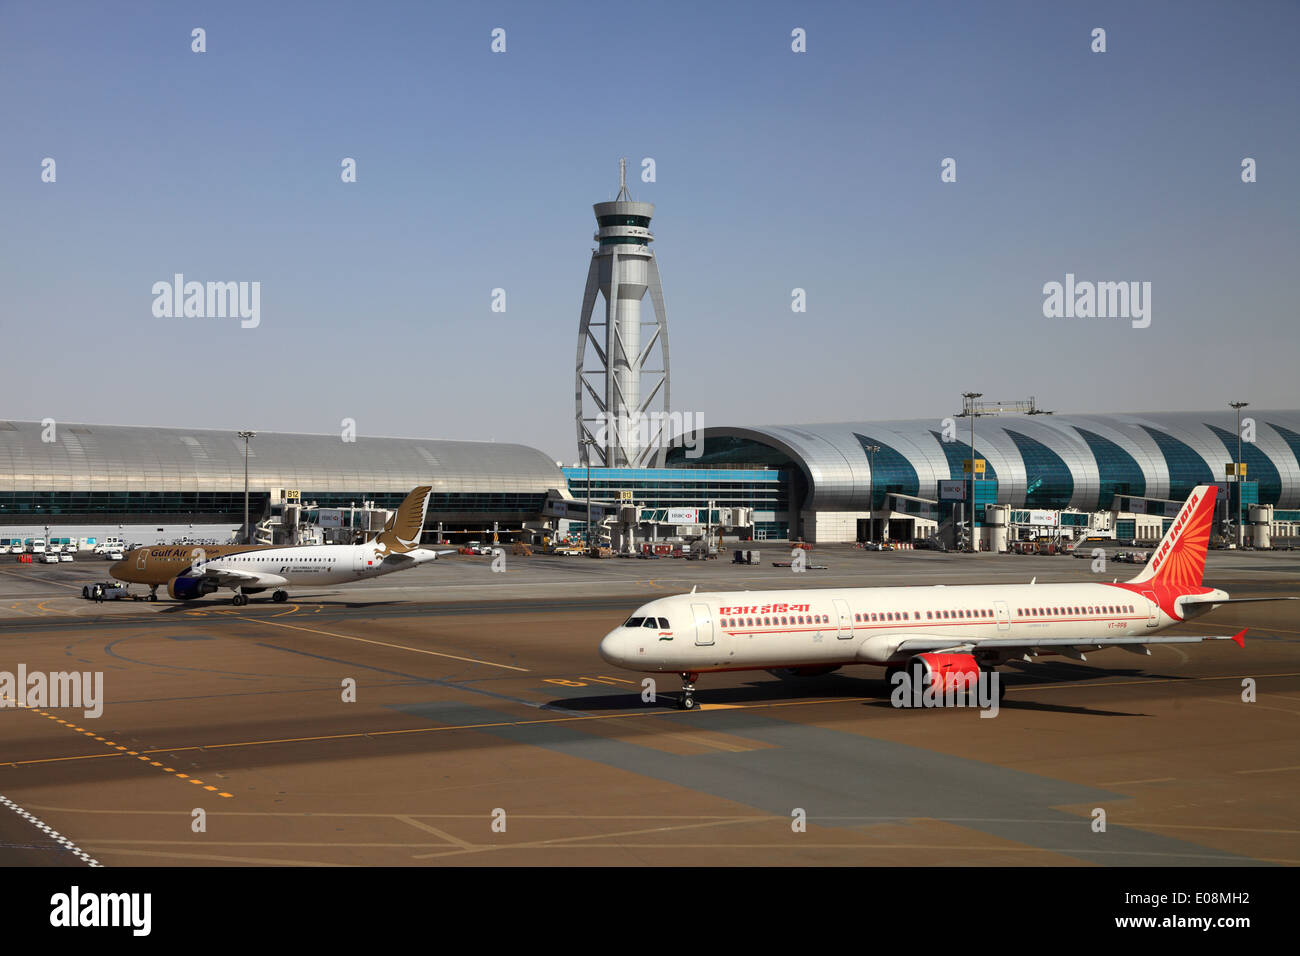 Air India and Gulf Air airplanes at Dubai Airport, UAE Stock Photo